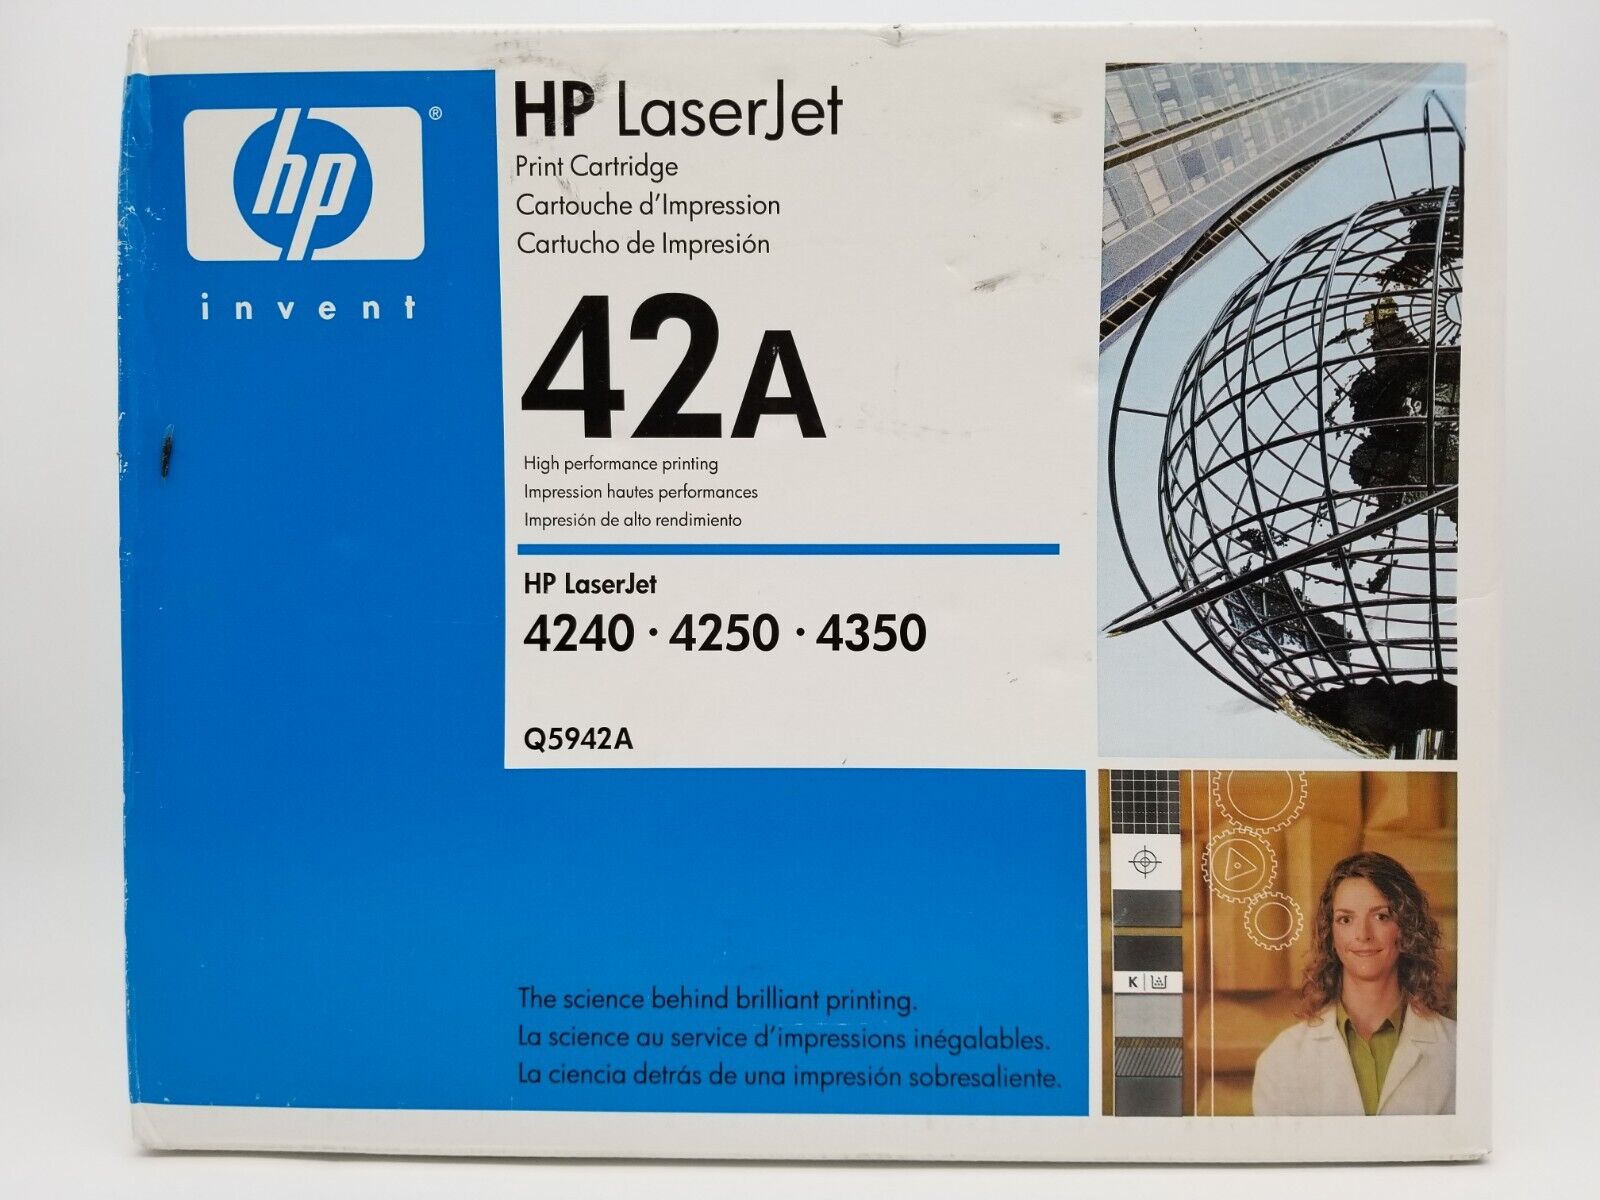 Genuine HP 42A Black Toner Cartridge - Q5942A - for LaserJet 4240 4250 4350 -